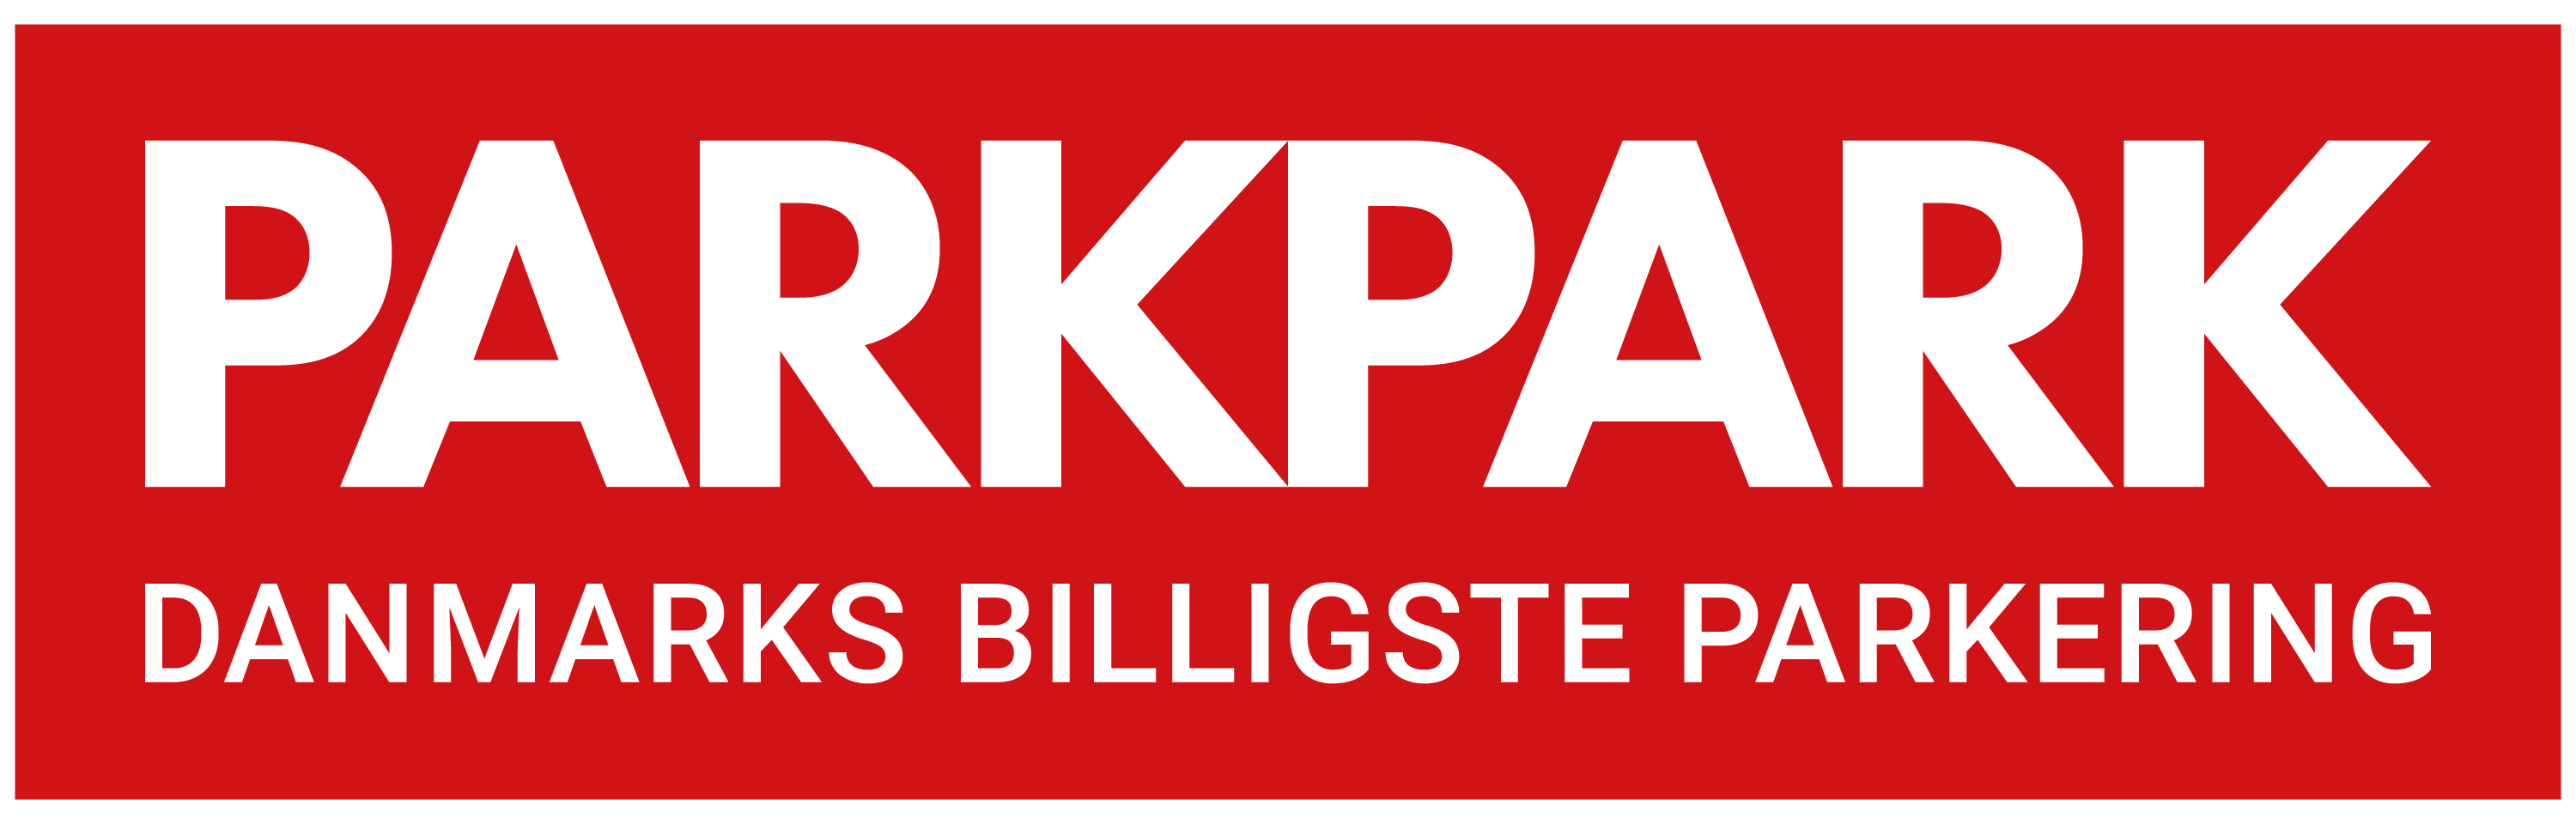 parkpark-logo_